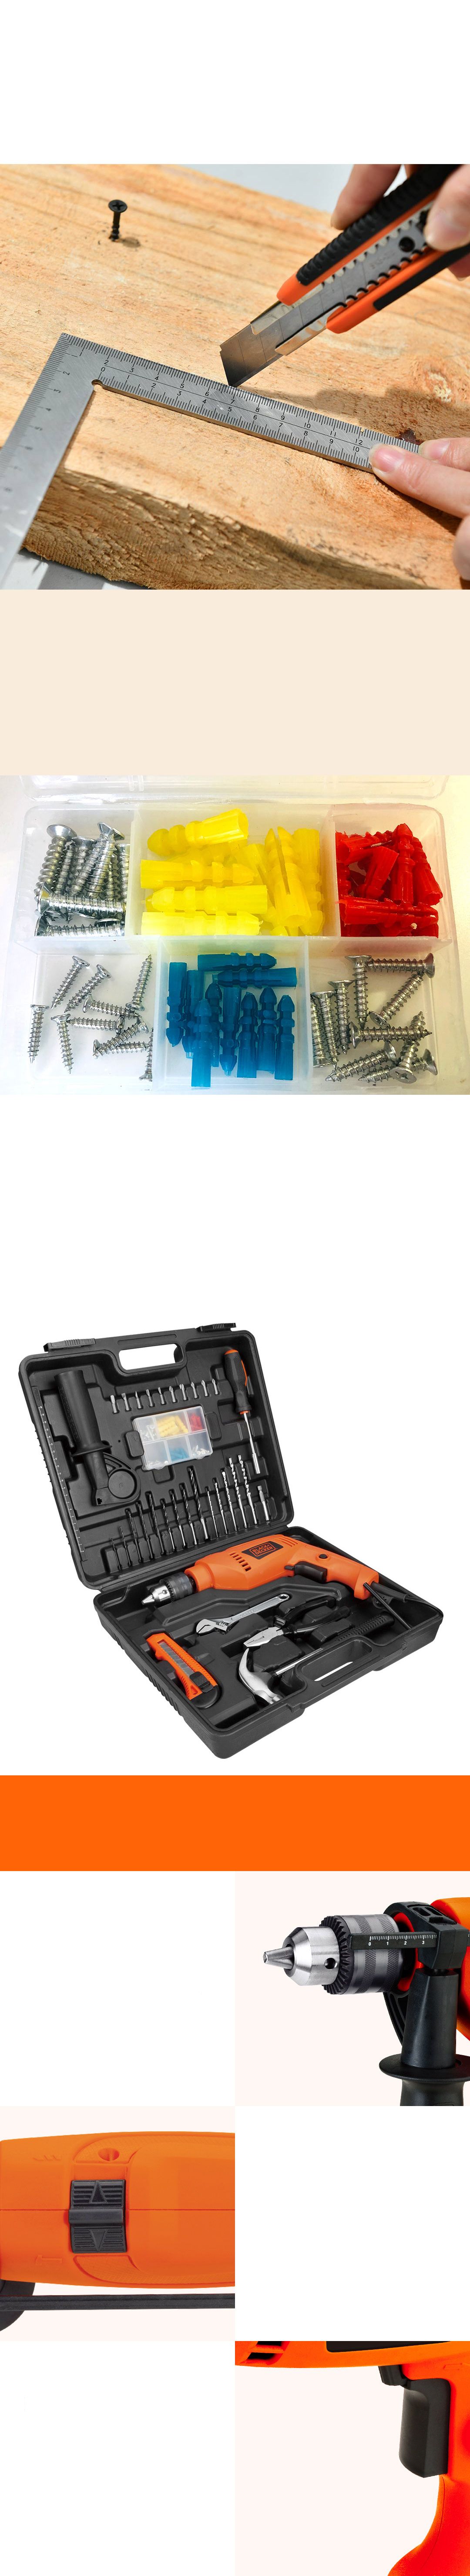 BlackampDecker-550W-Multi-functional-Power-Drill-Impact-Electric-Drill-Portable-Screwdriver-Wire-Pli-1554645